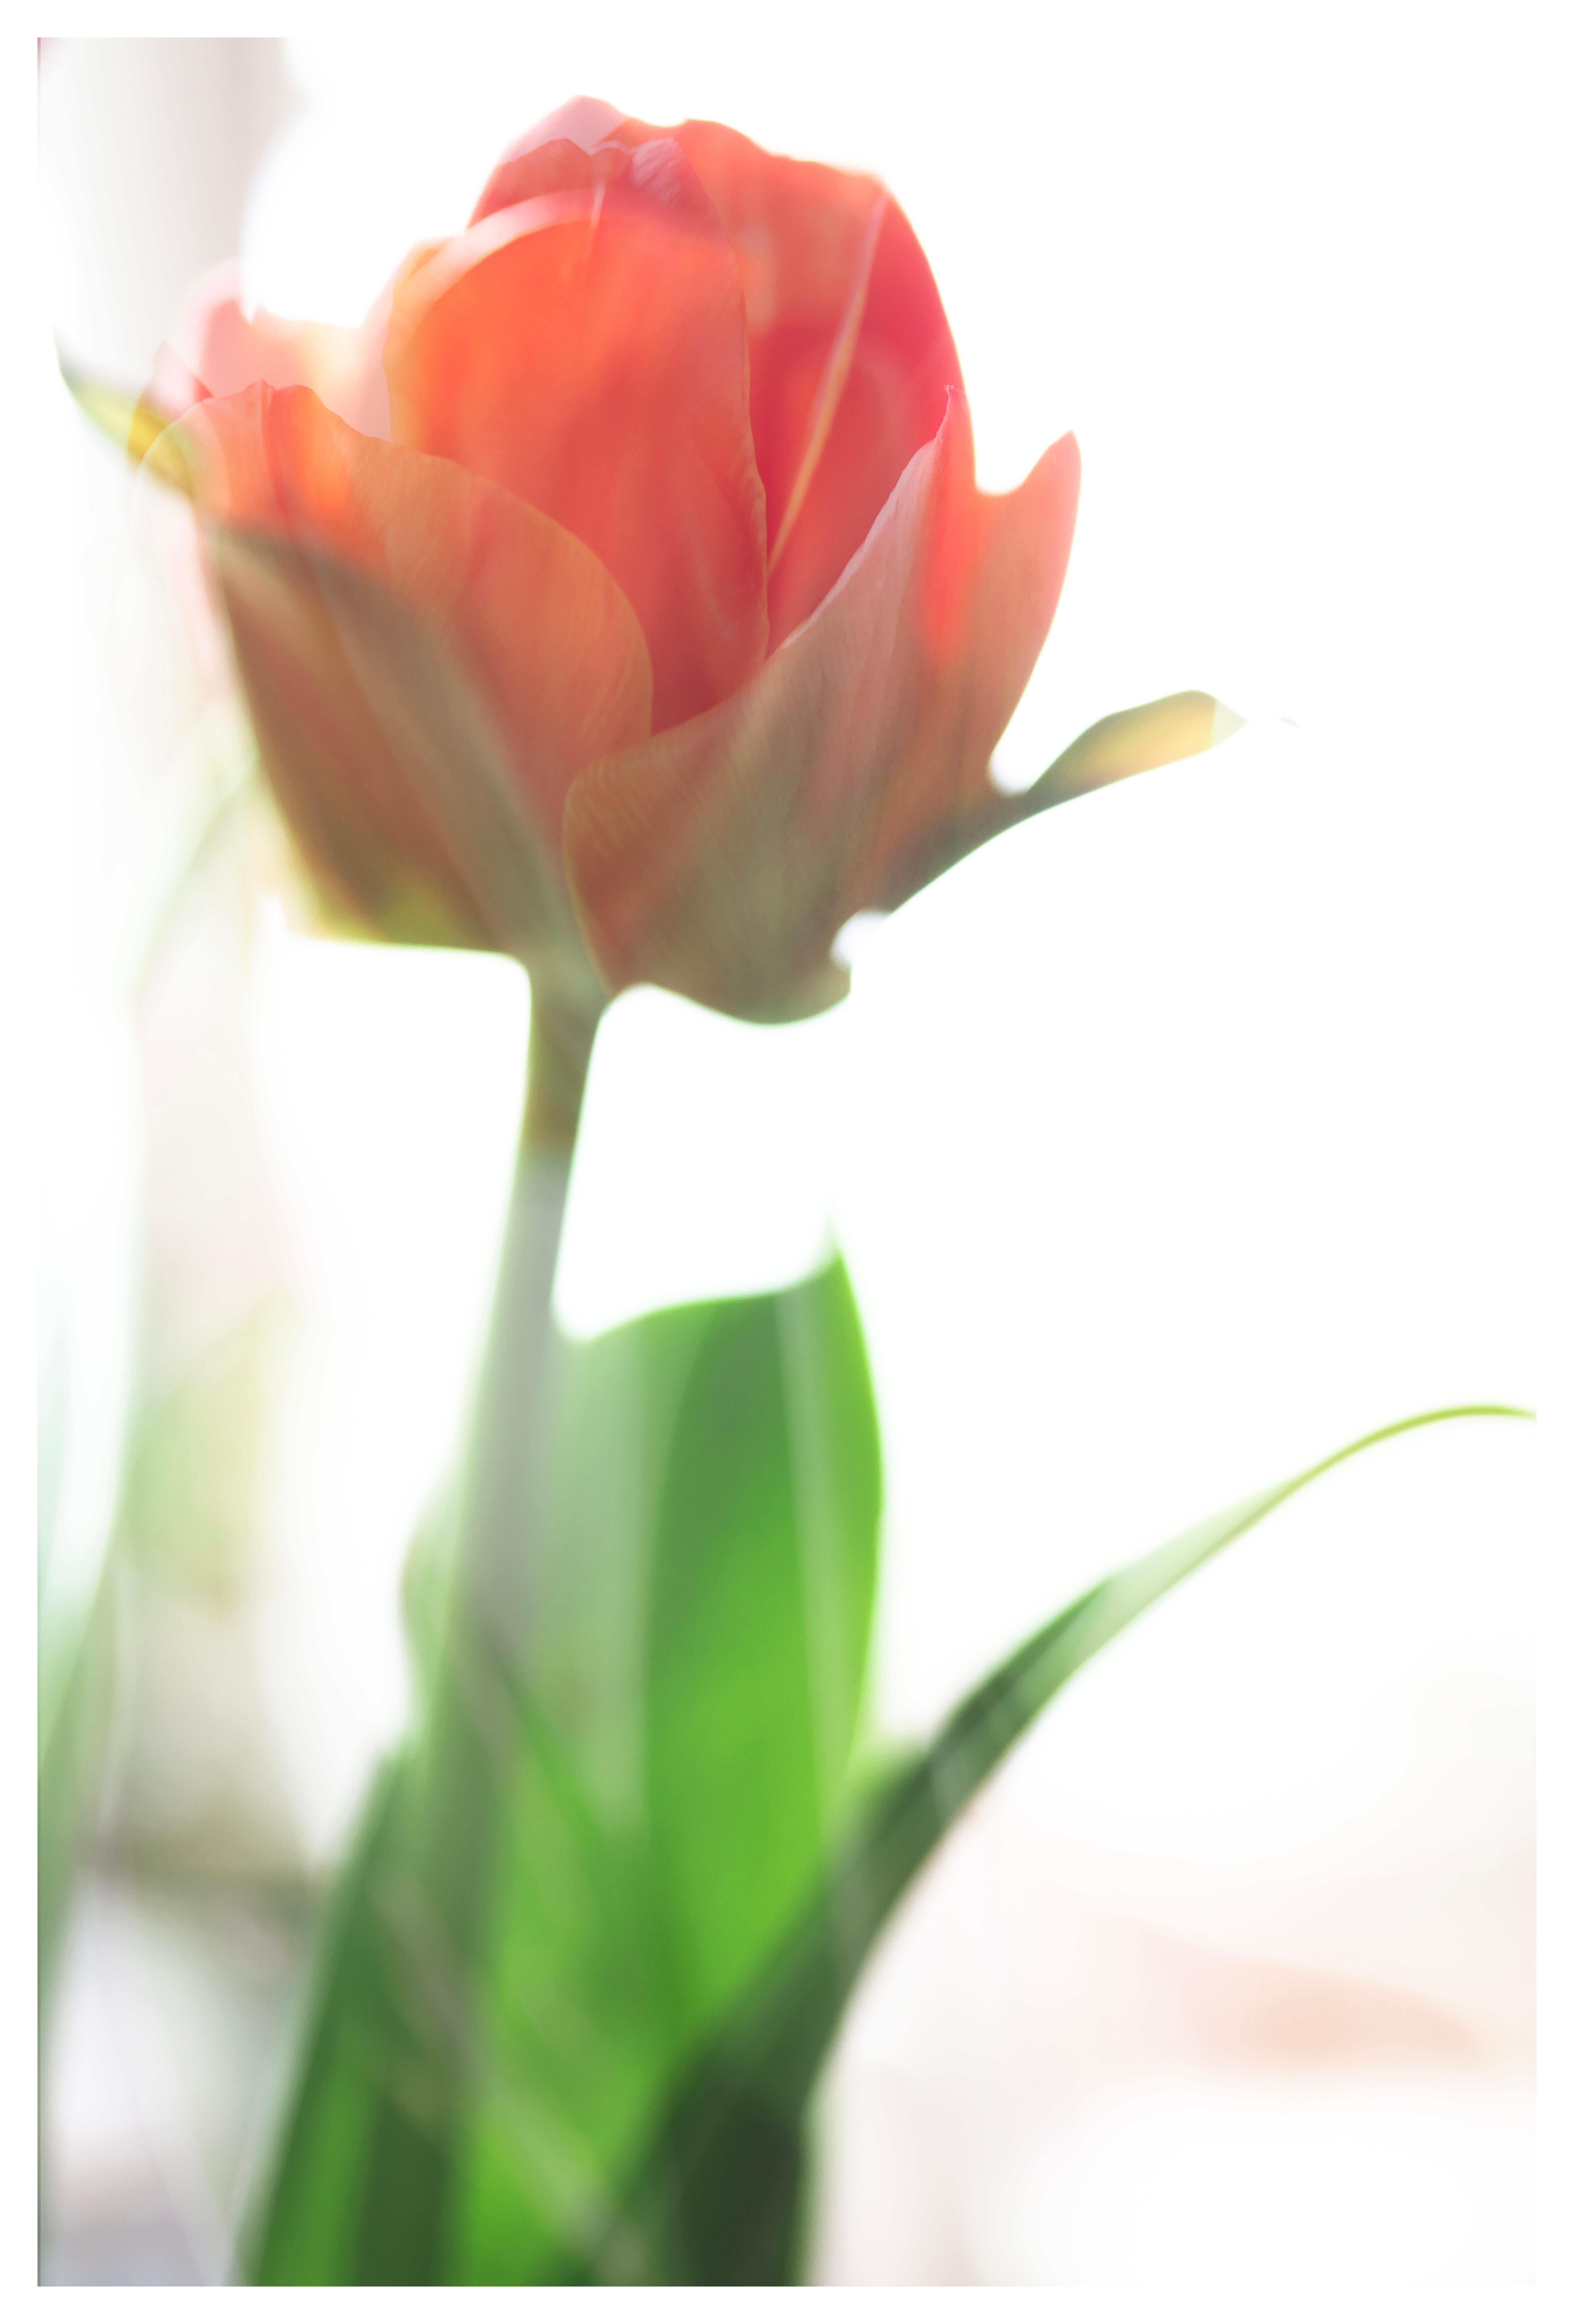 Sophia Milligan Color Photograph - 'Tulip Awakening' Large Scale Photograph bold flower pastel red orange white